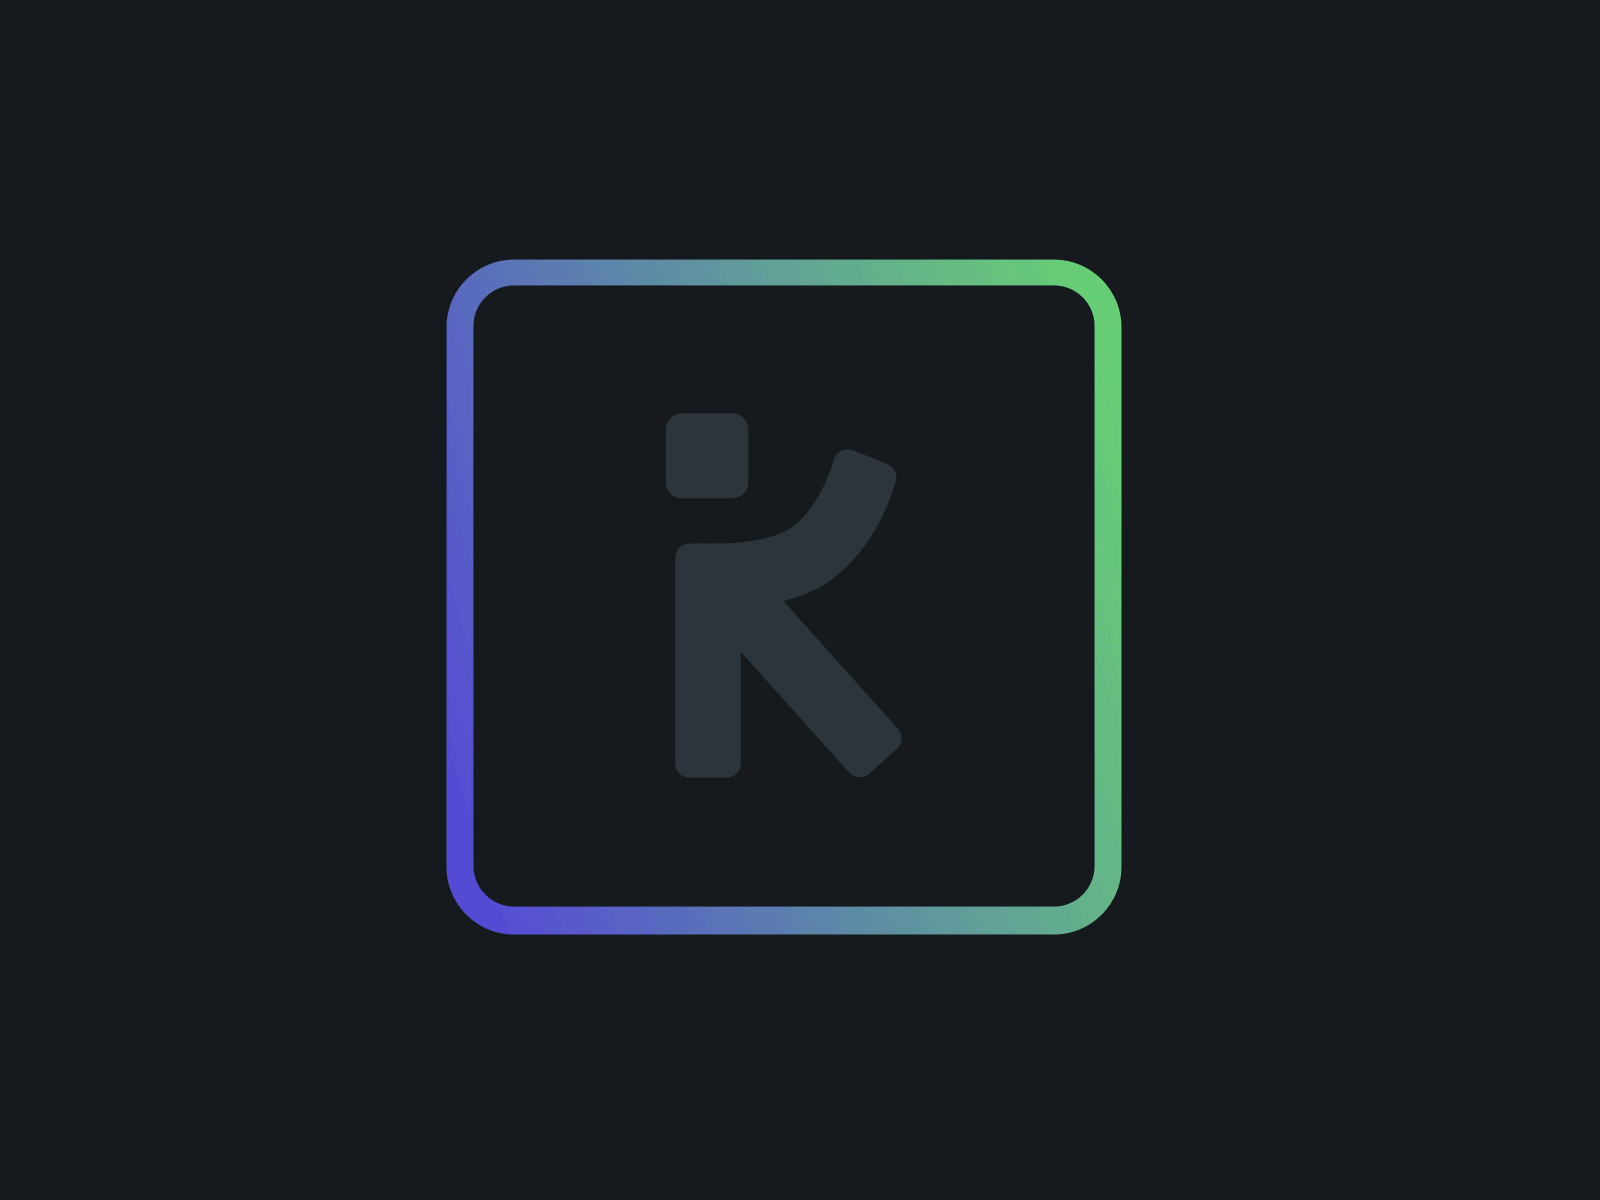 'Waving K' Loading Spinner: Known2Me icon logo k k icon loader loading spinner logo logo design waving